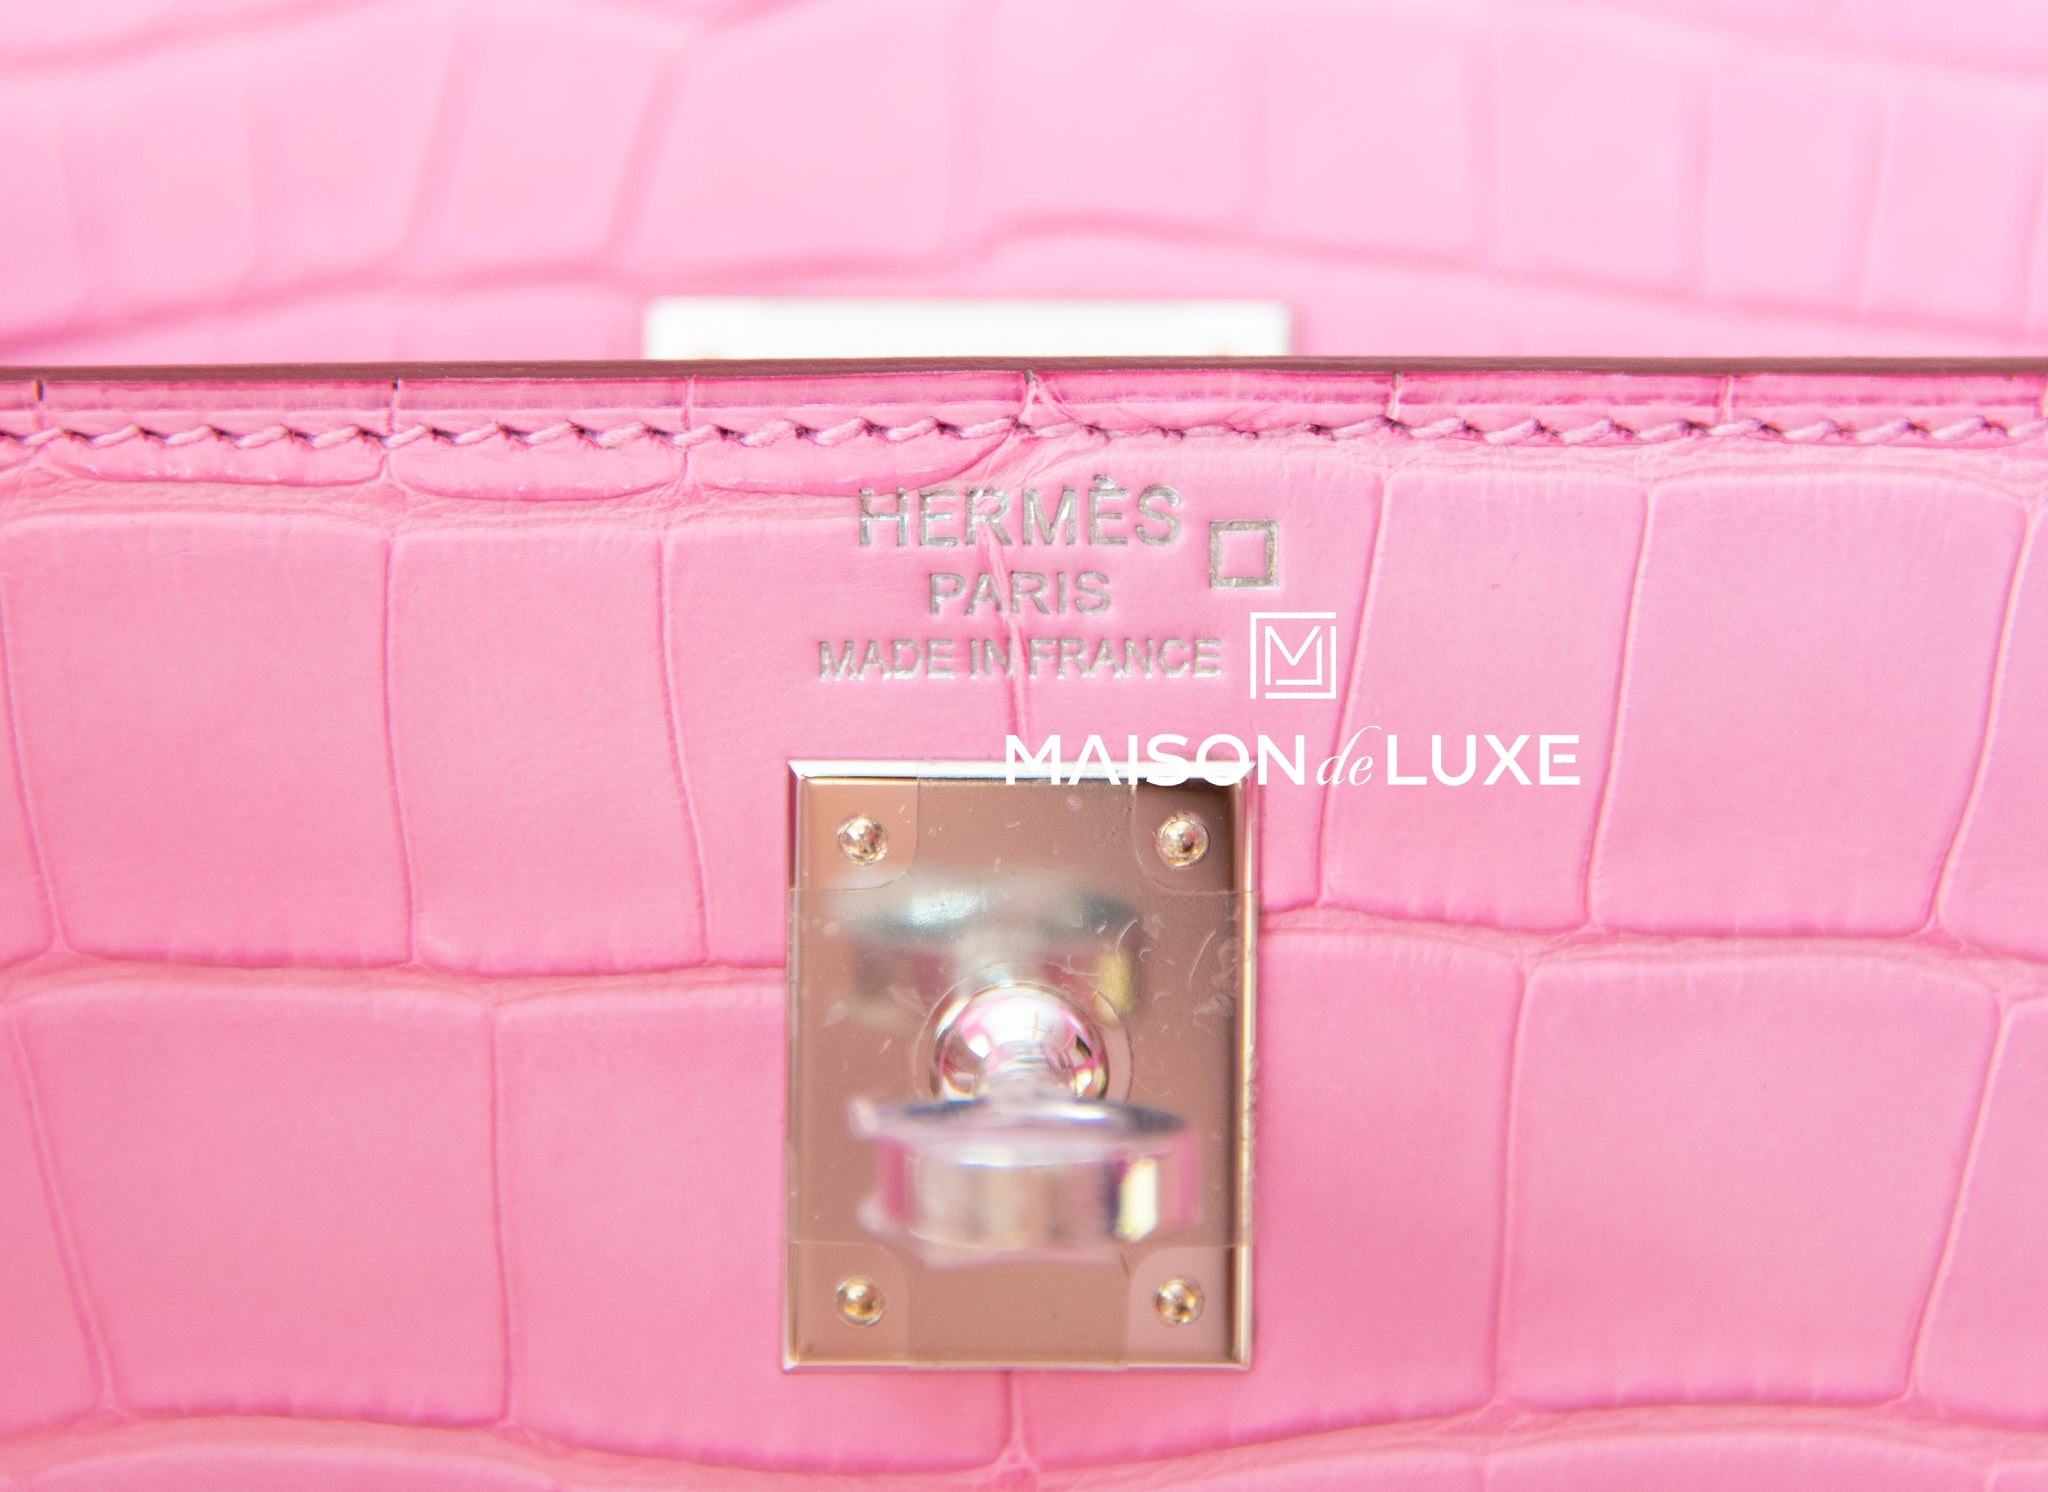 Brand new Hermes kelly 25 5P bubblegum pink matte croco Phw